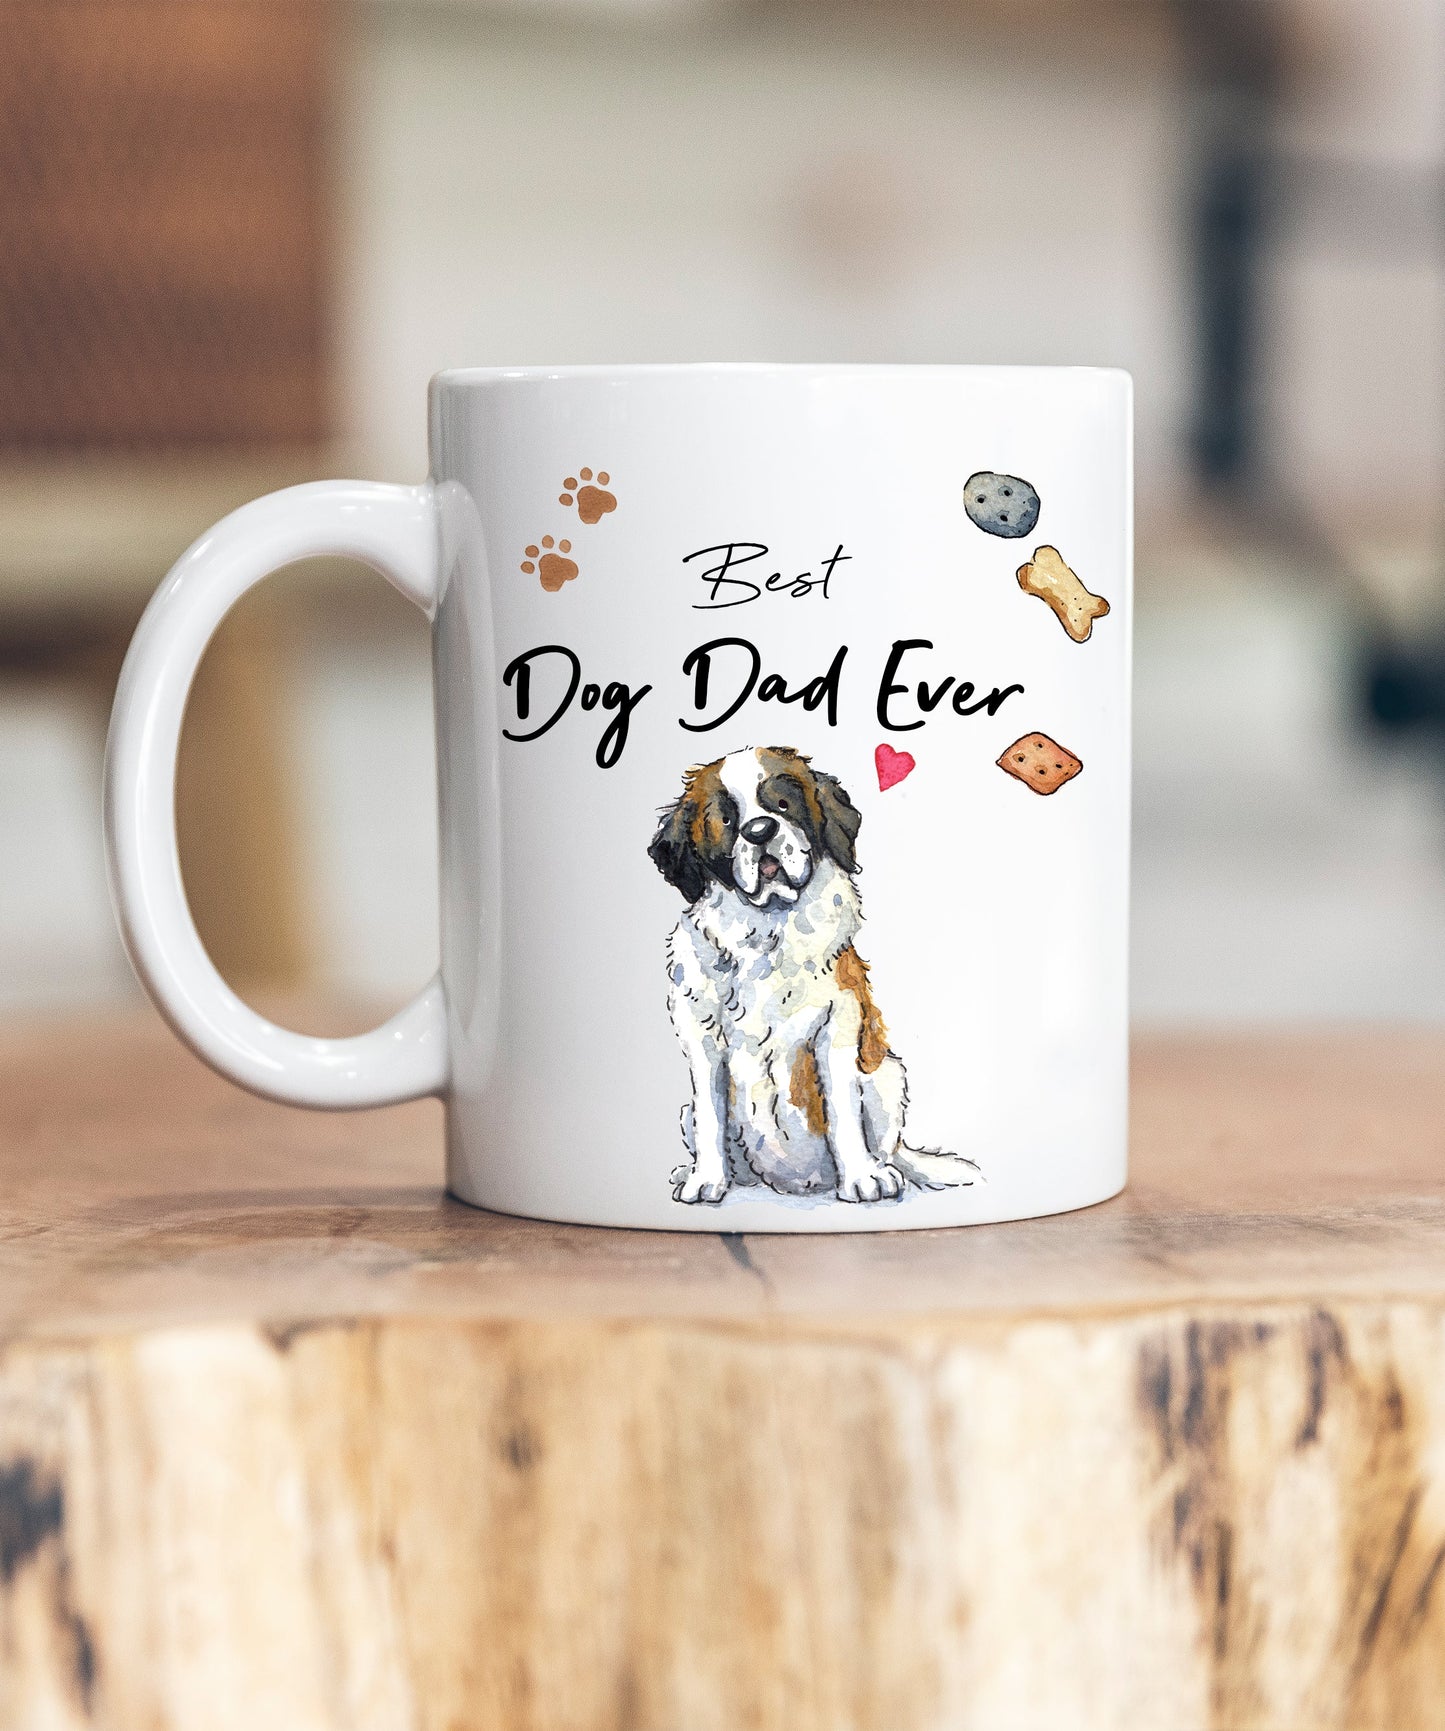 Best Dog Dad St Bernard Ceramic Mug